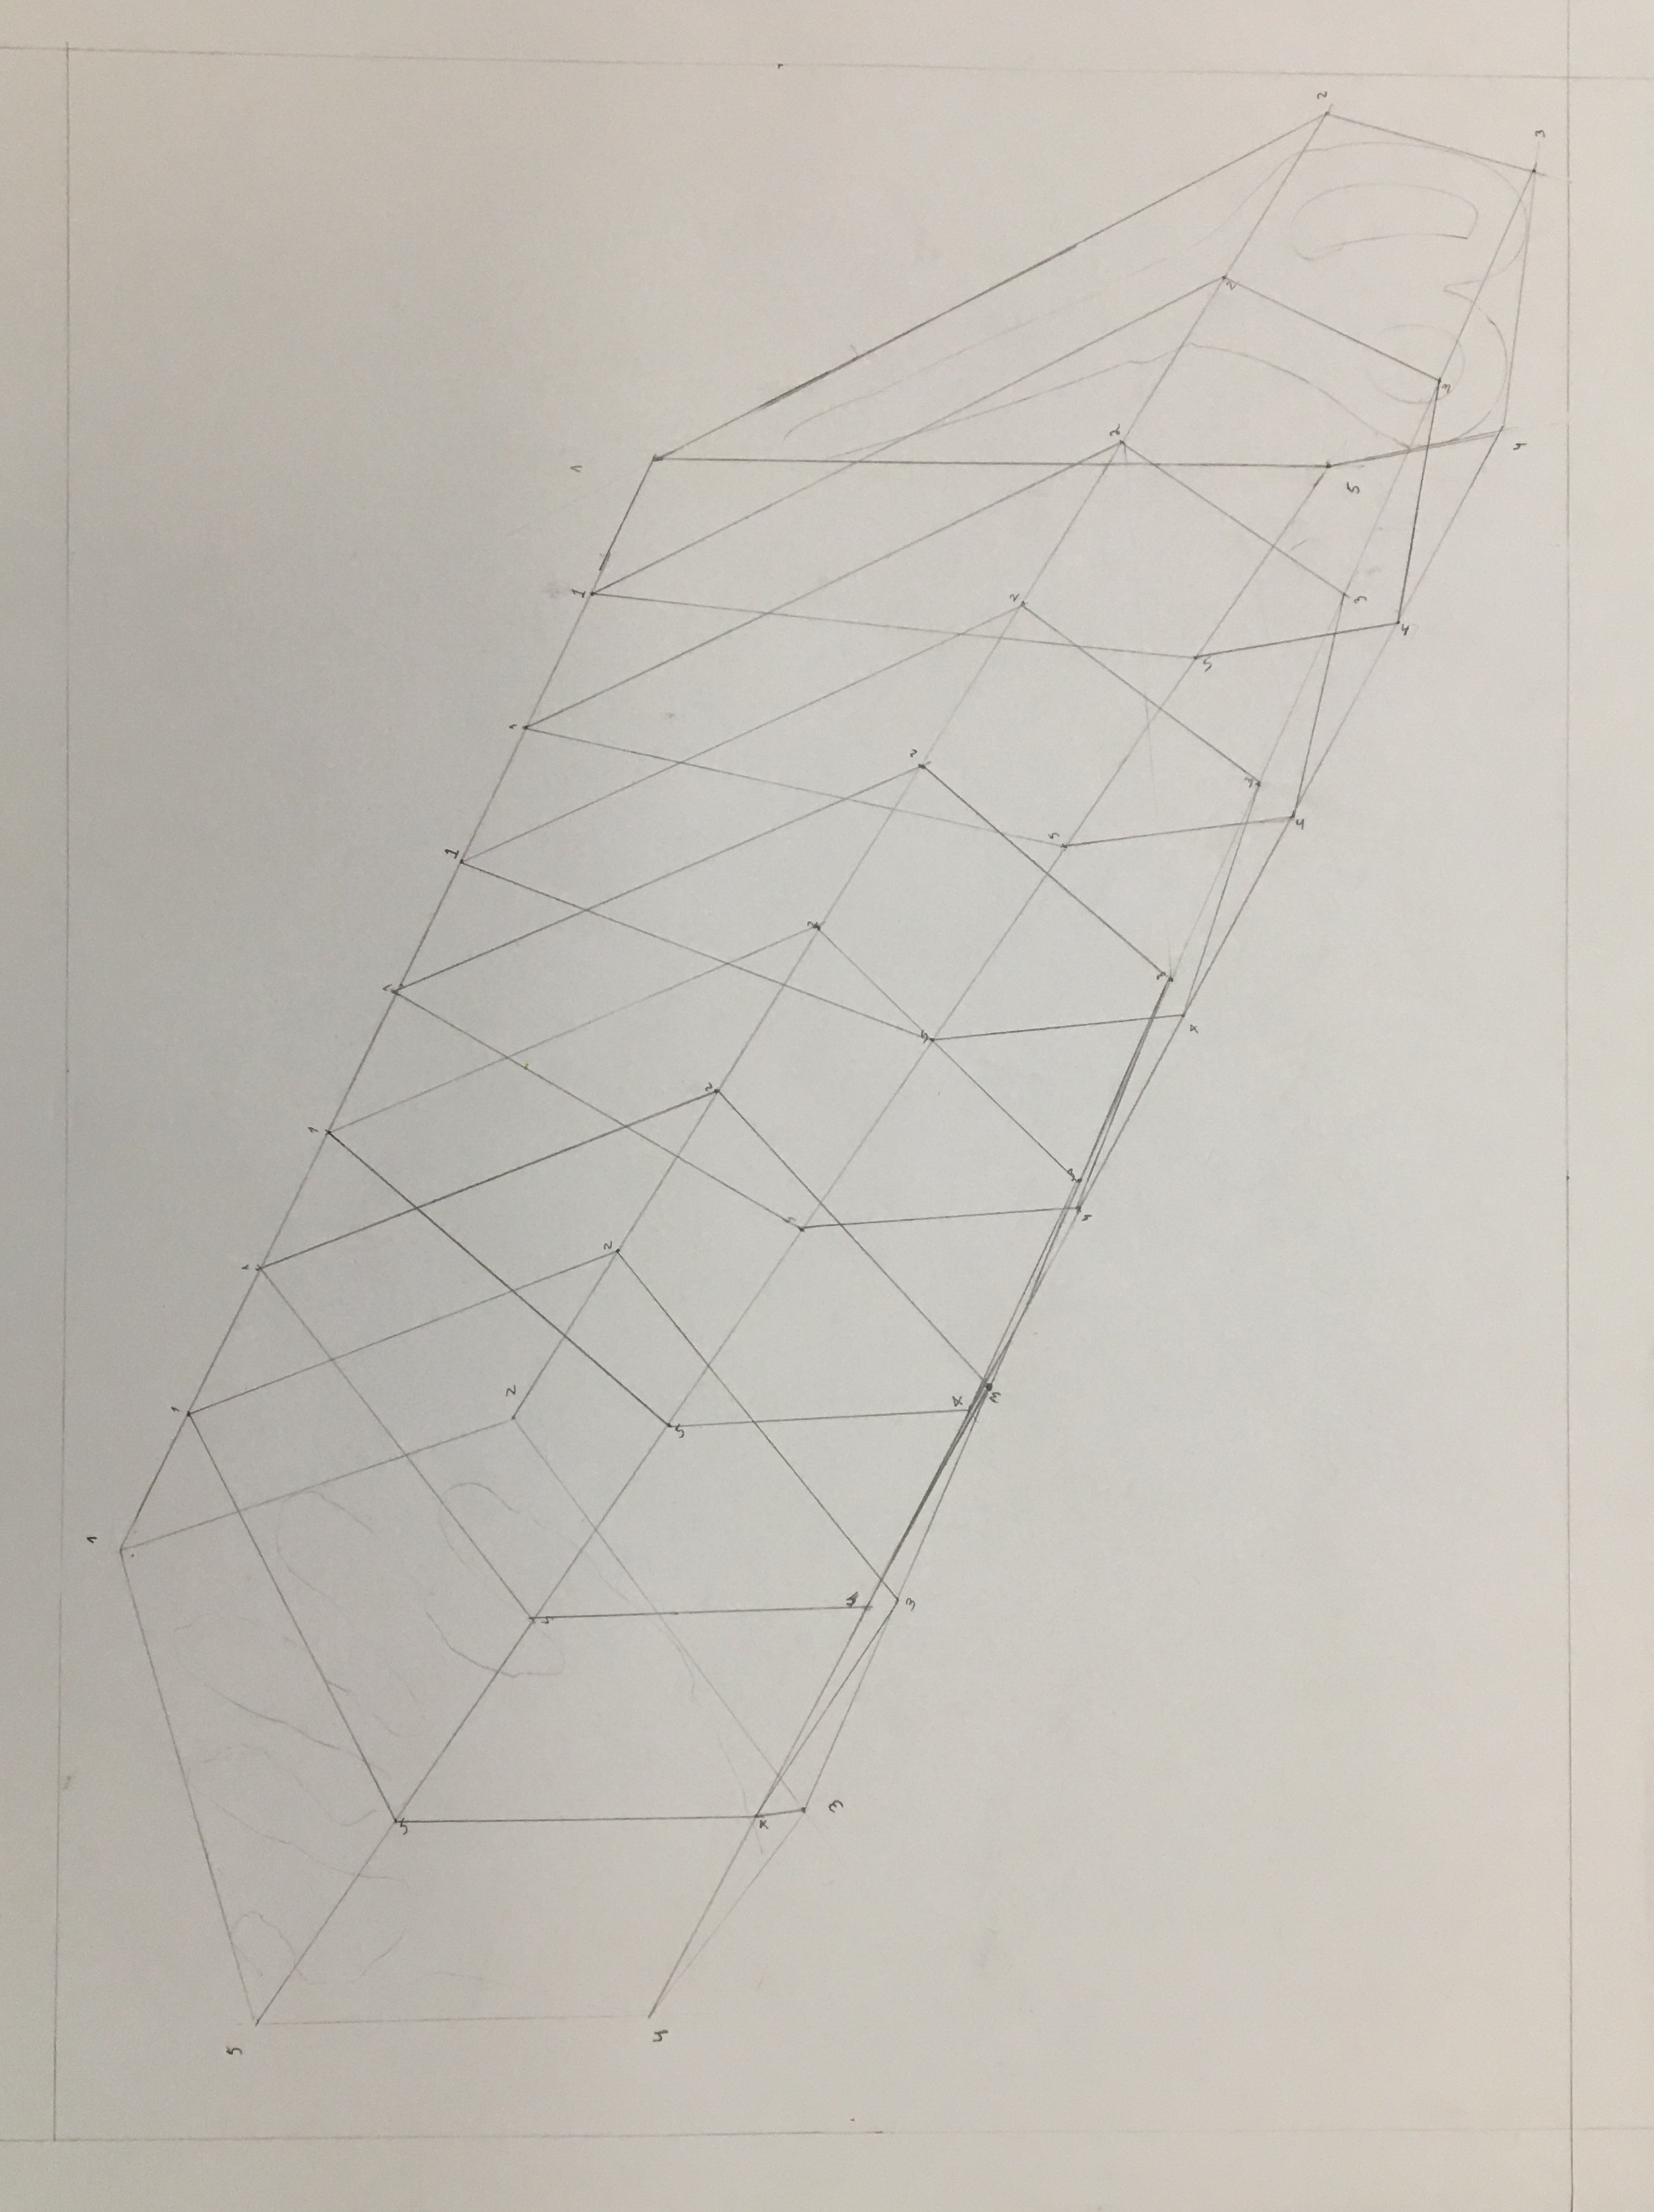 9 Polygon drawing